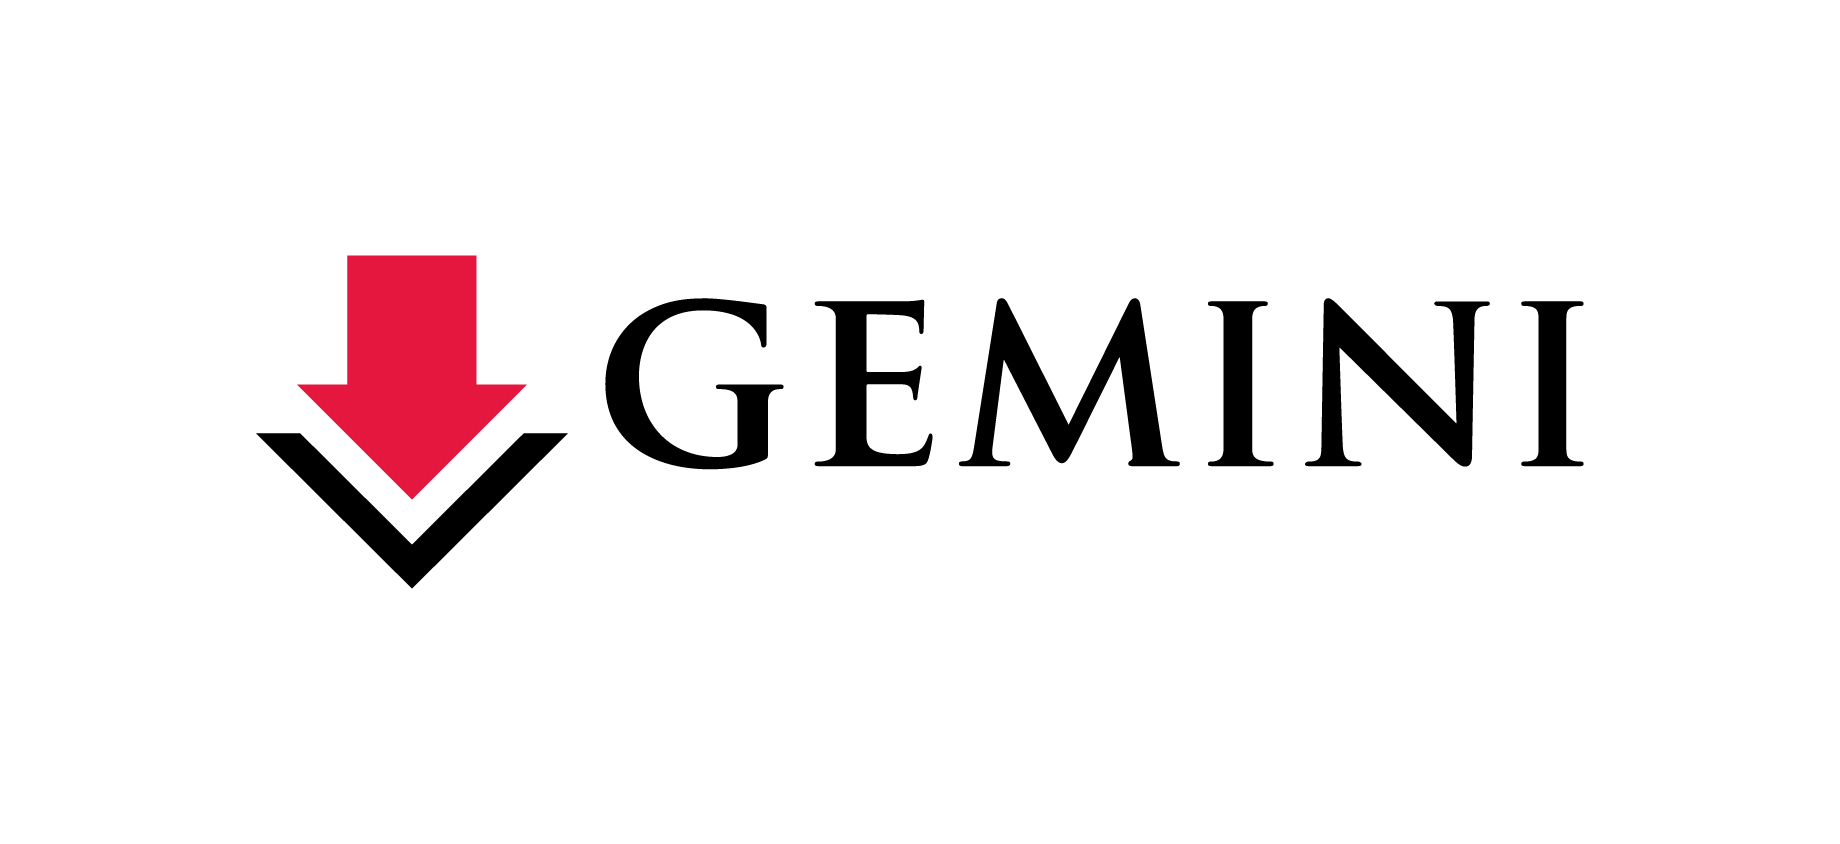 gemini signs Logo photo - 1